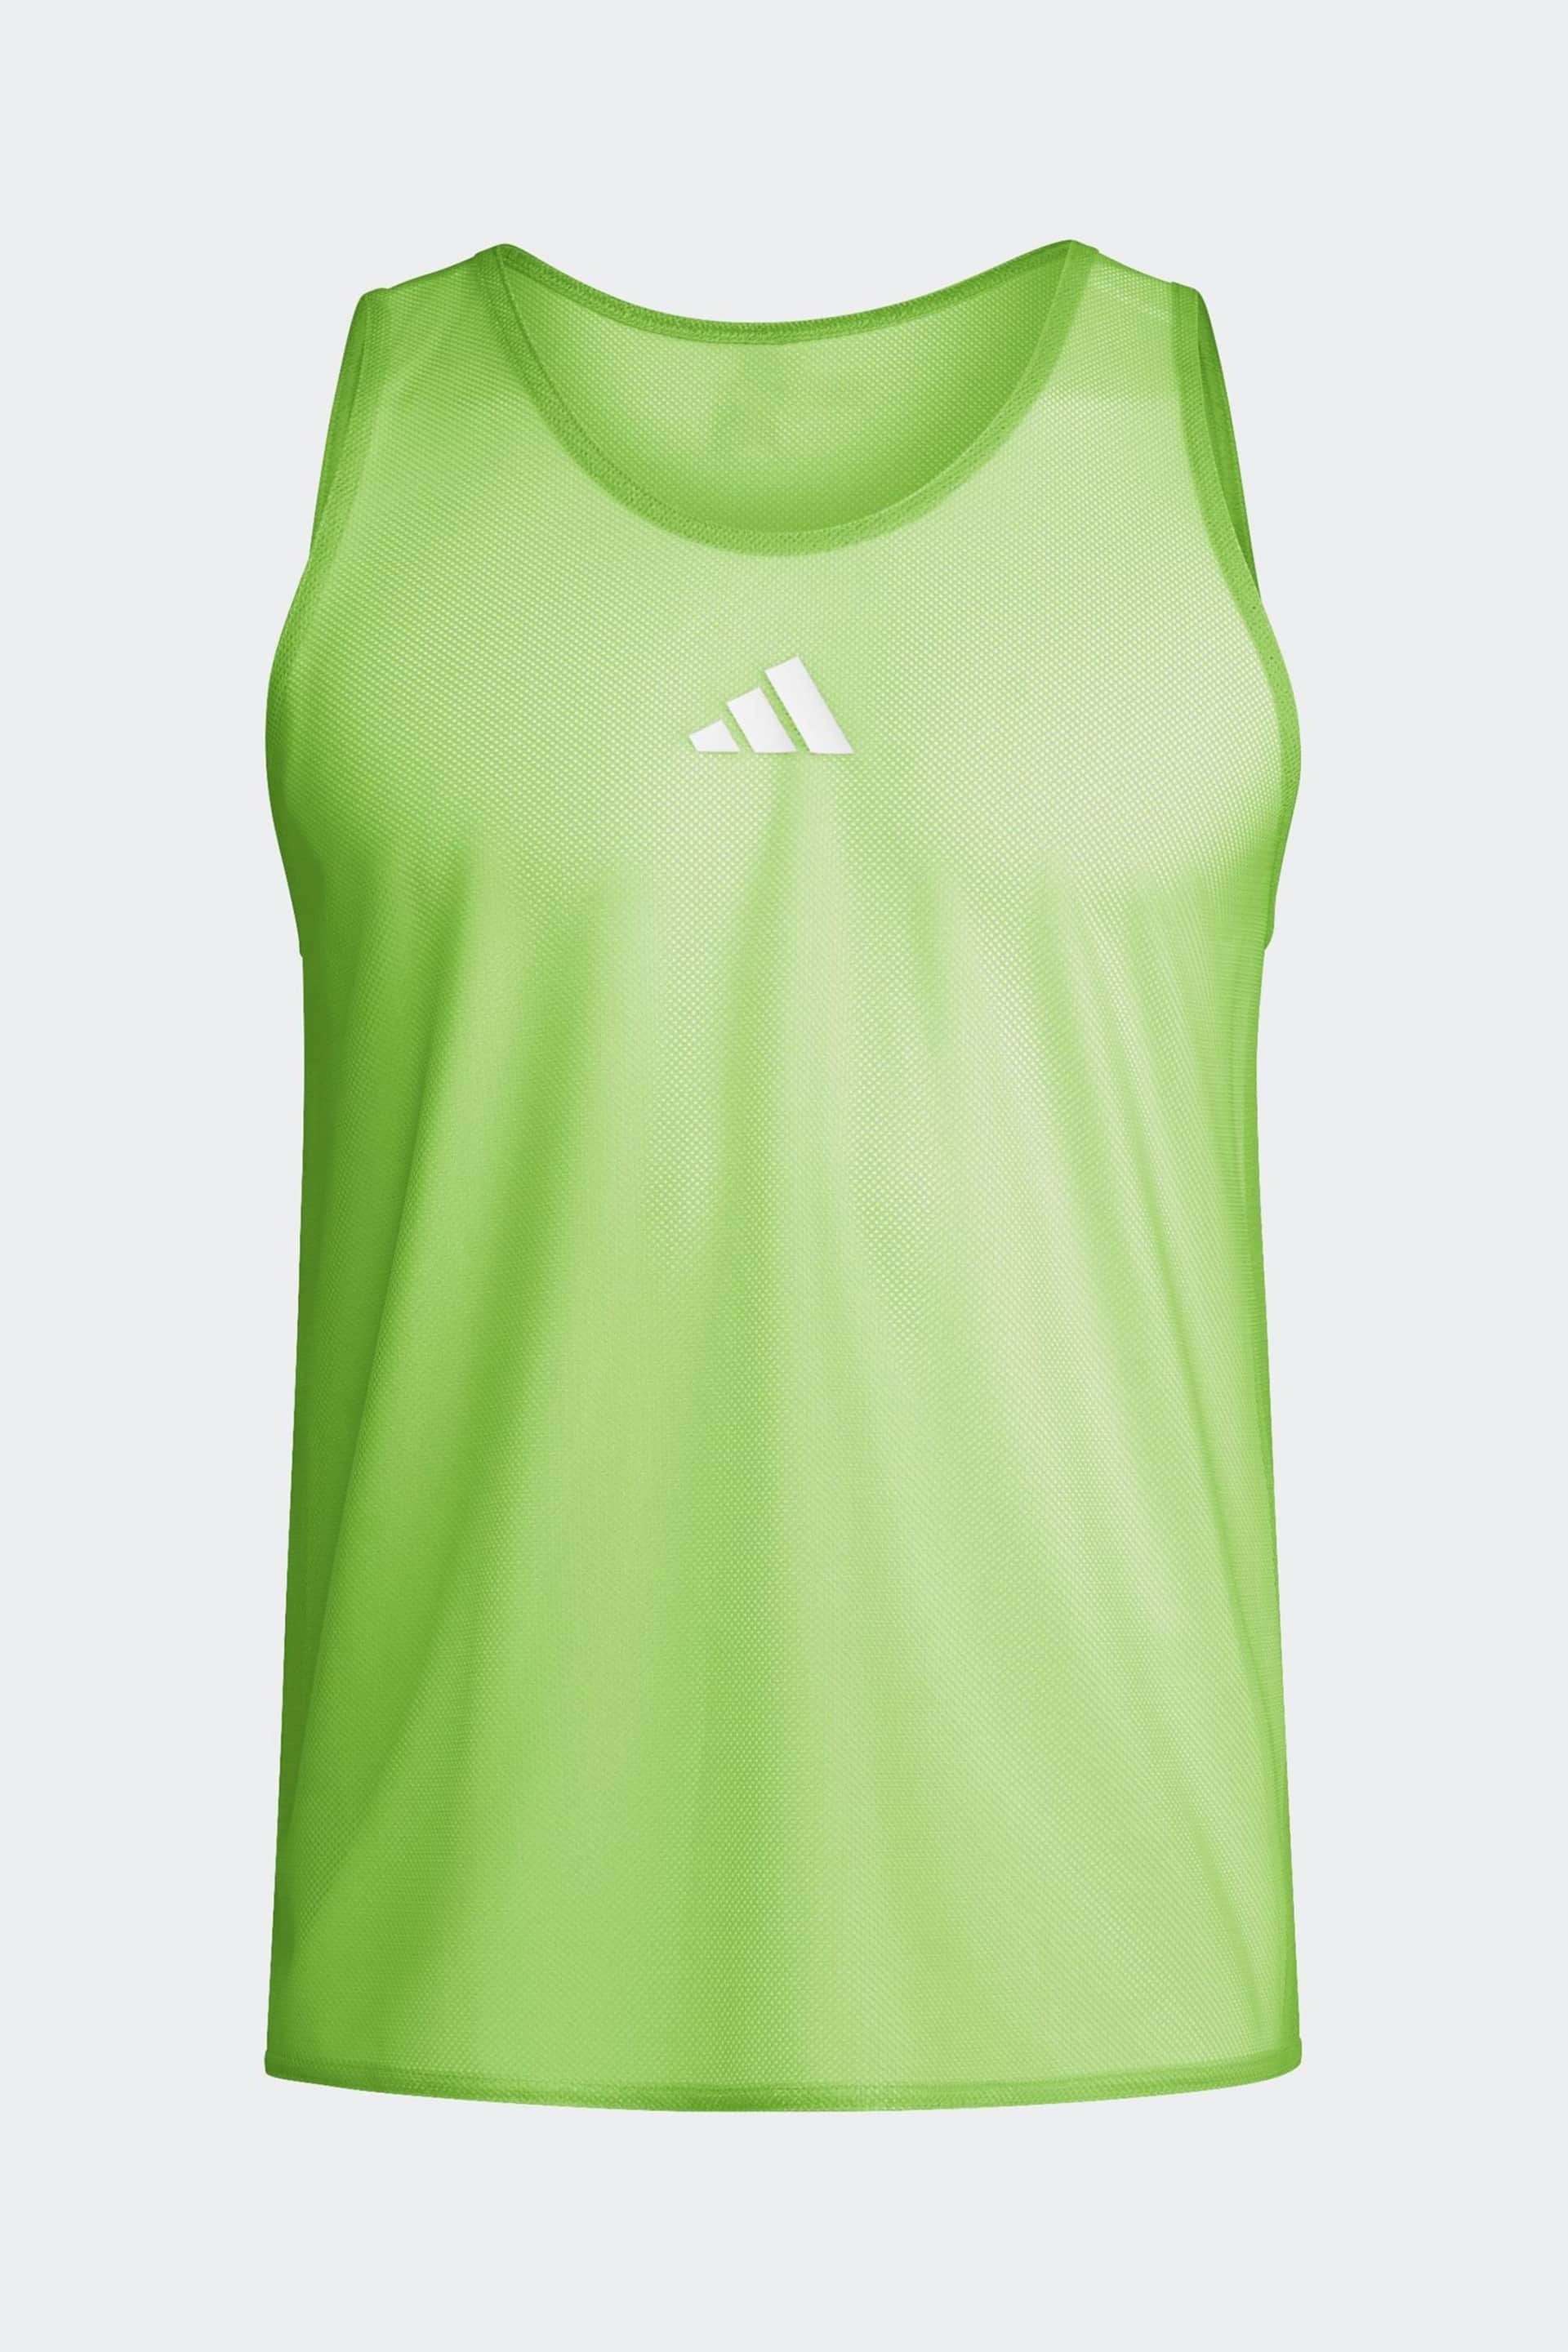 adidas Bright Green Performance Vest - Image 1 of 2